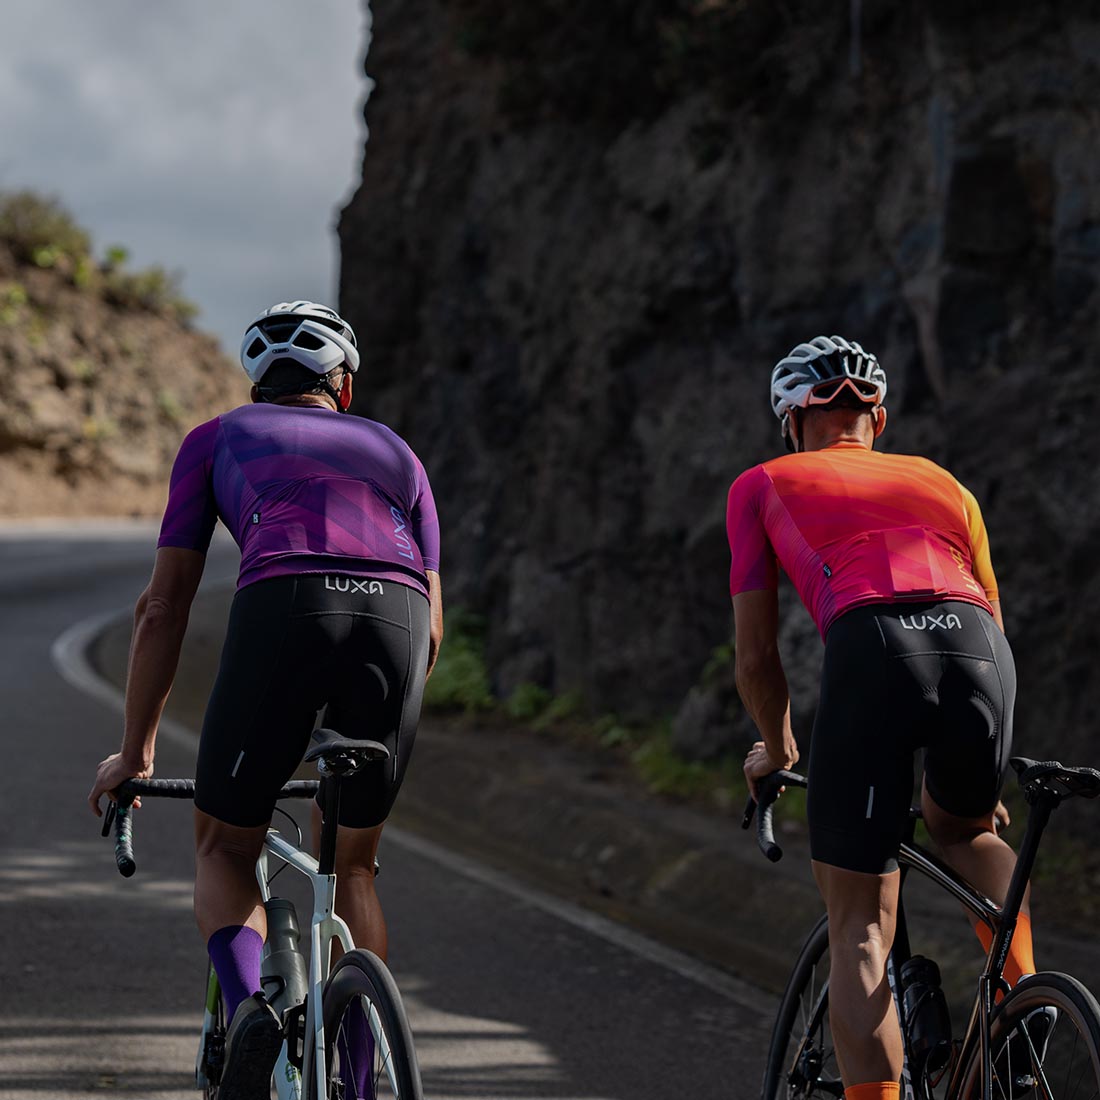 luxa cycling premium bib shorts and tights